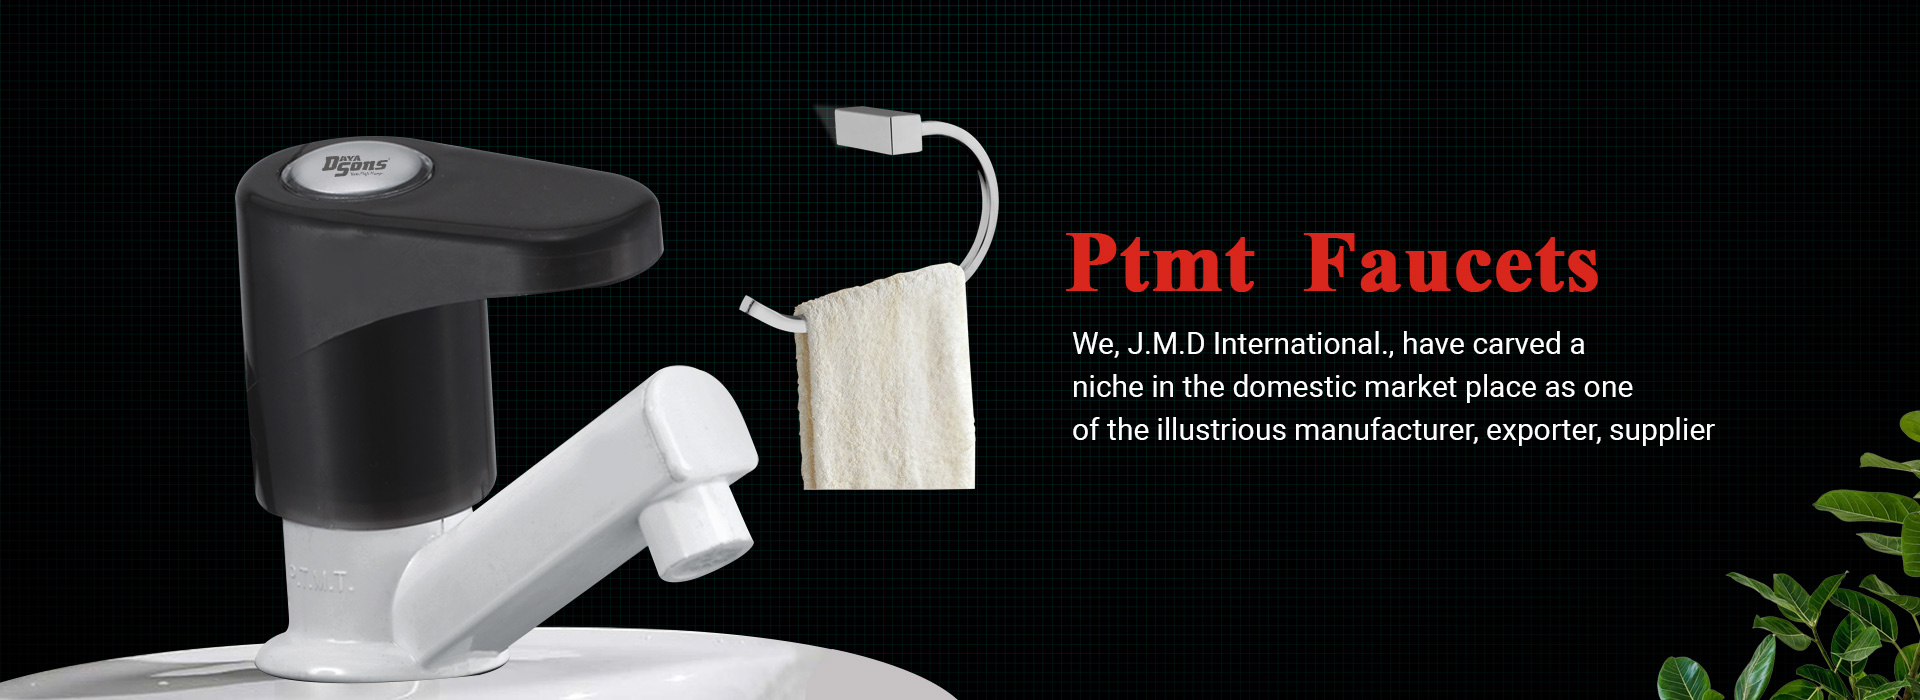 PTMT Faucets Manufacturers